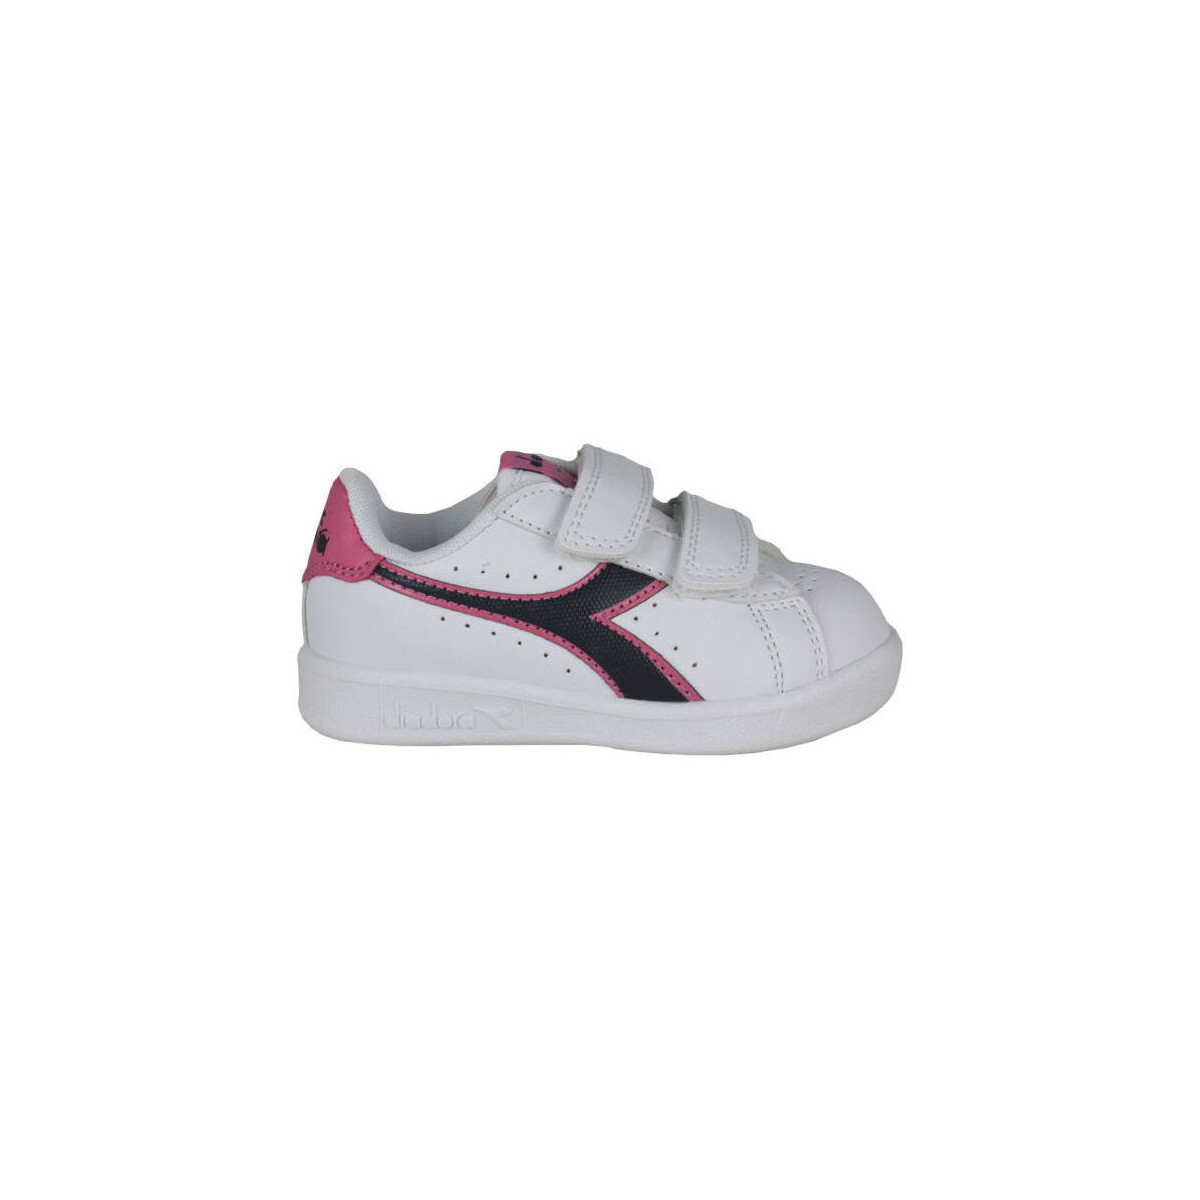 Sneakers Diadora Game p td 101.173339 01 C8593 White/Black iris/Pink pas